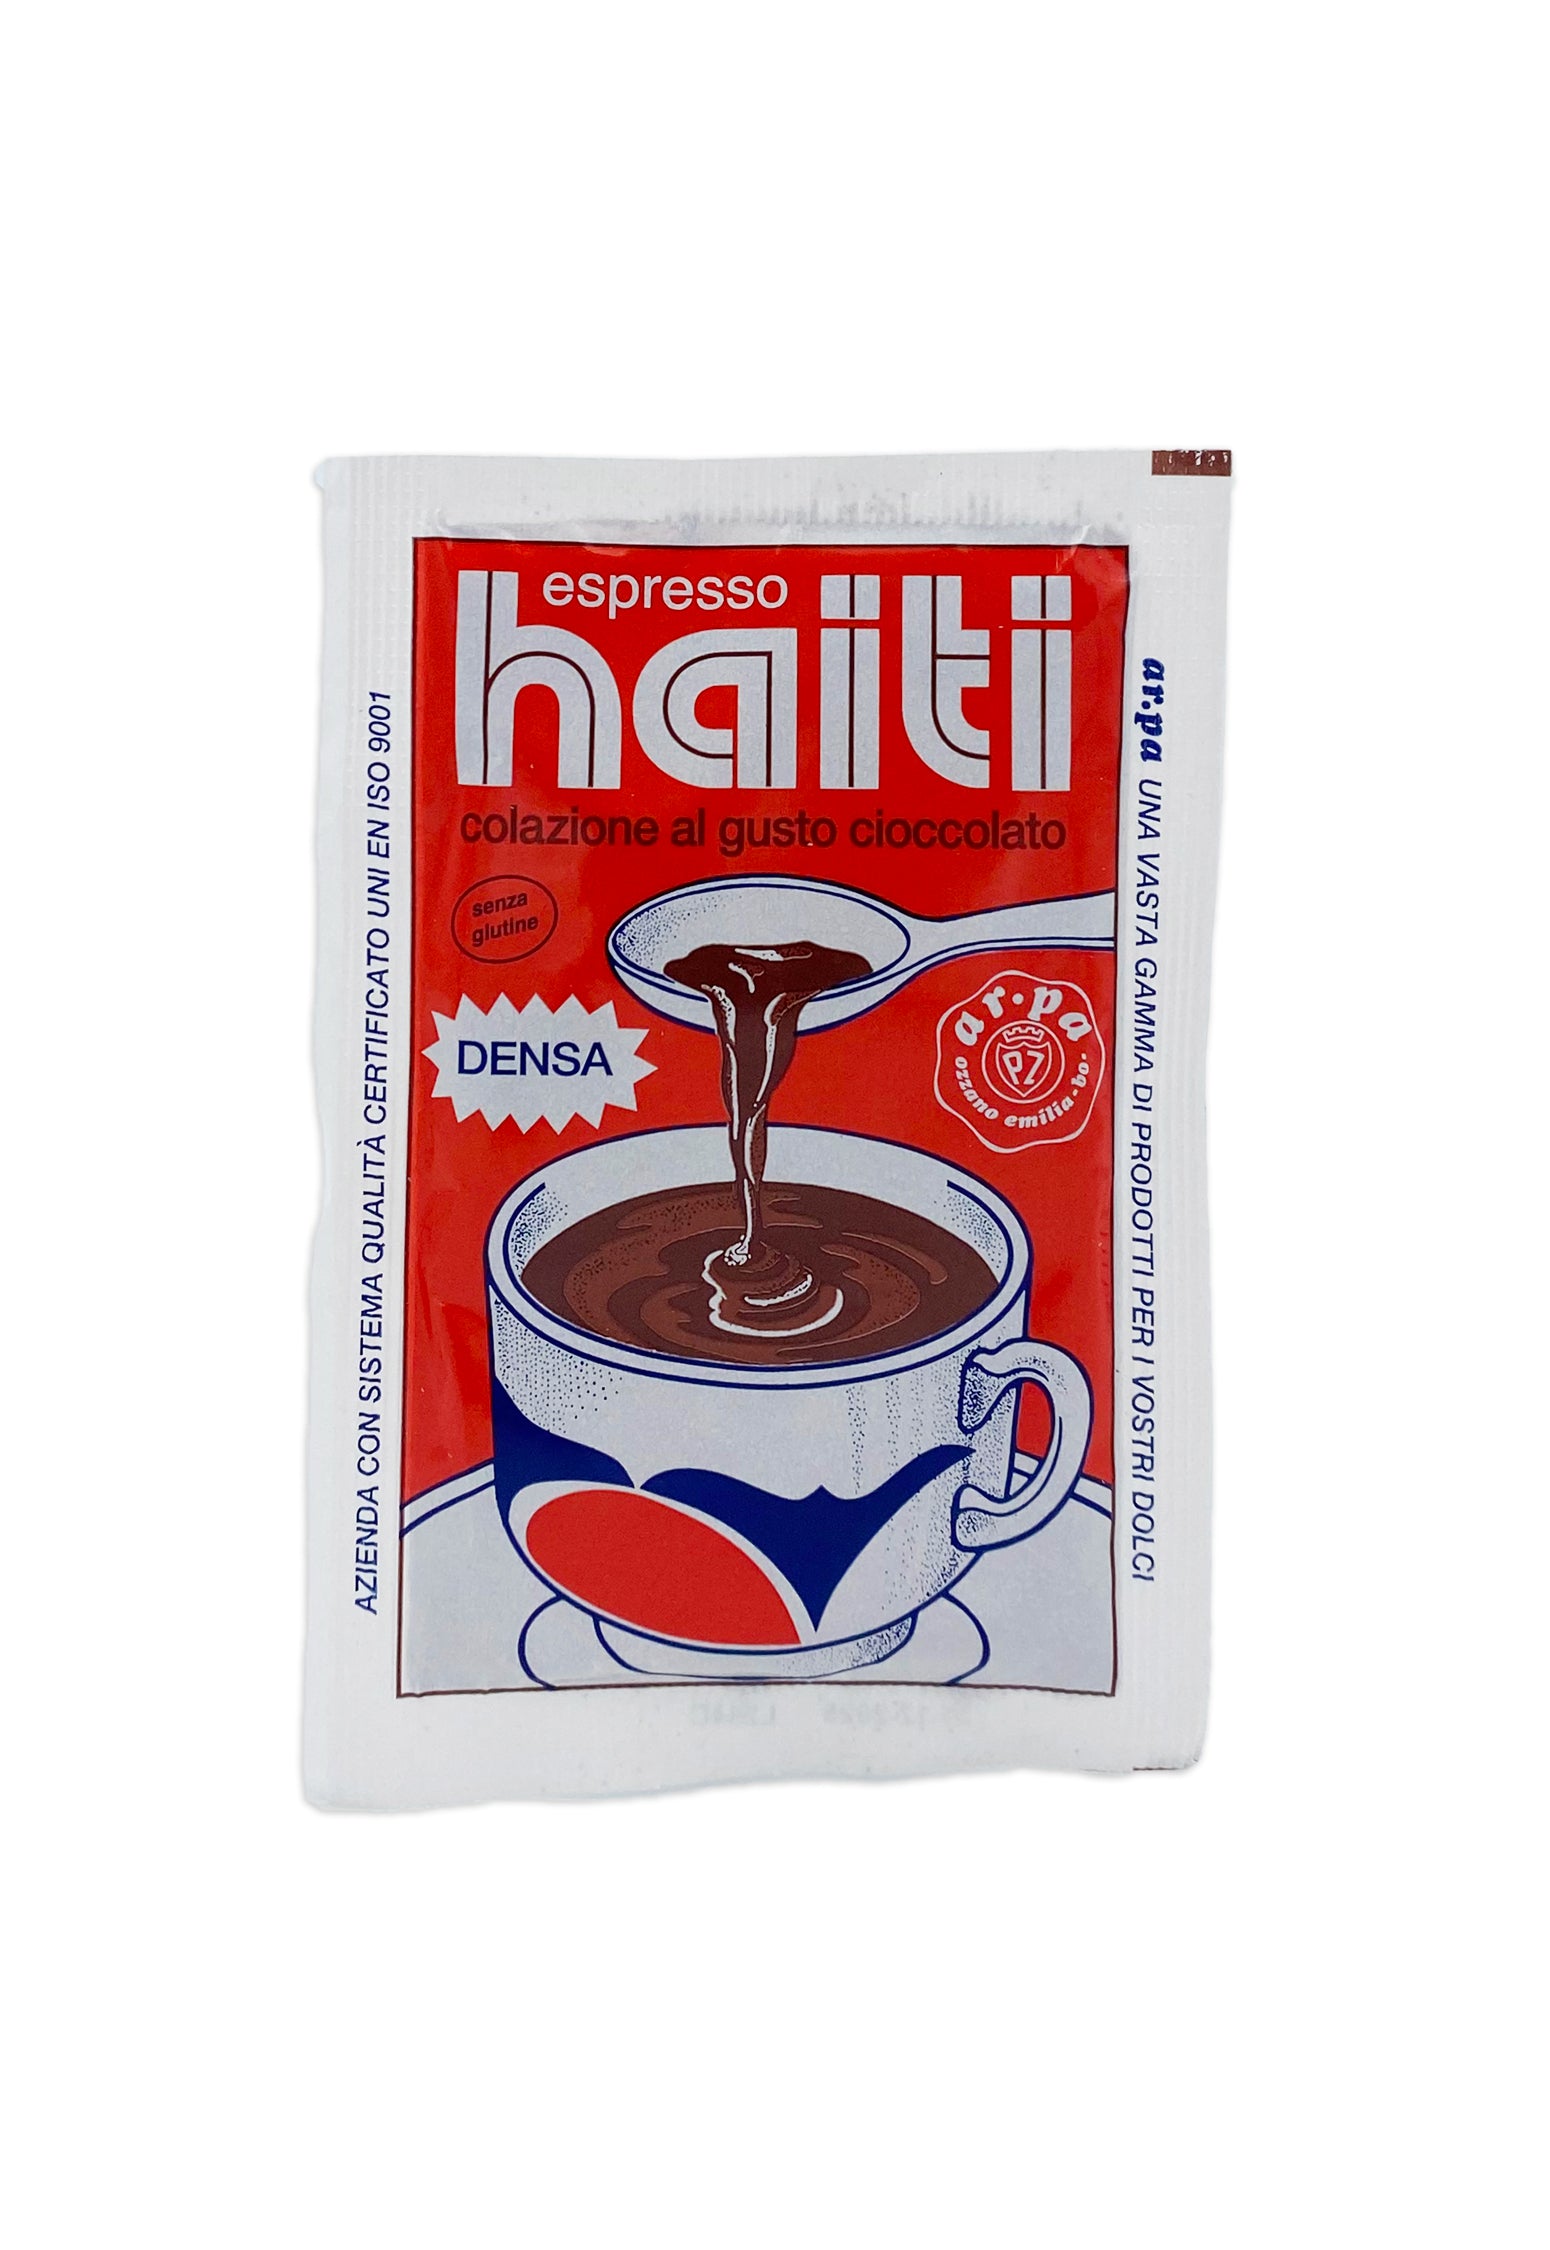 Espresso Haiti 28 g - Ar.pa Lieviti